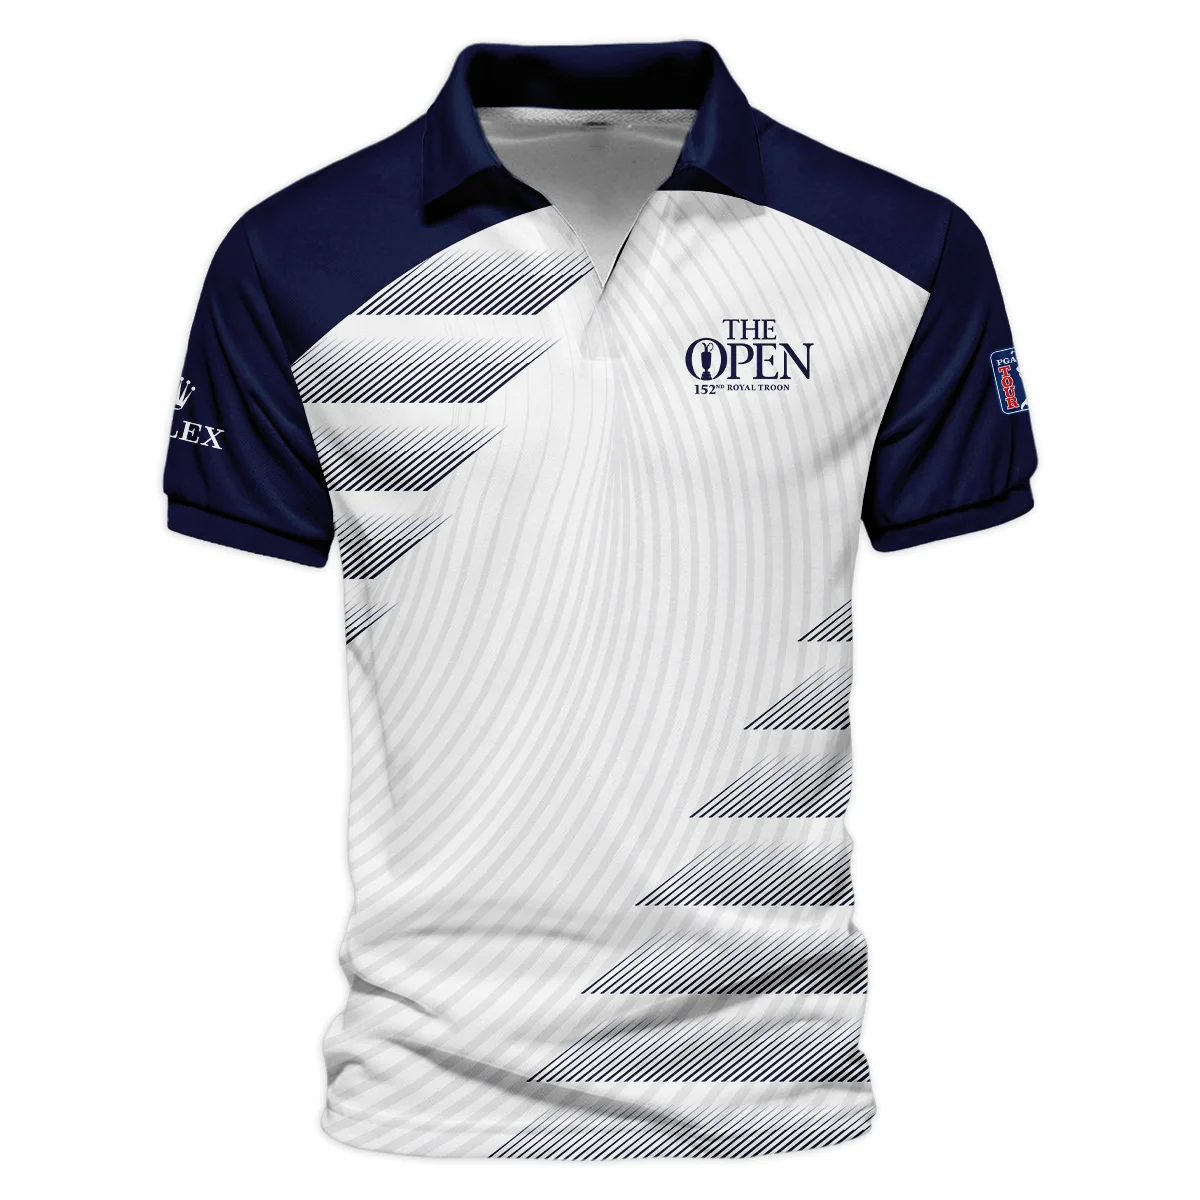 Rolex 152nd Open Championship Blue White Line Pattern Sleeveless Jacket All Over Prints HOTOP280624A02ROXSJK